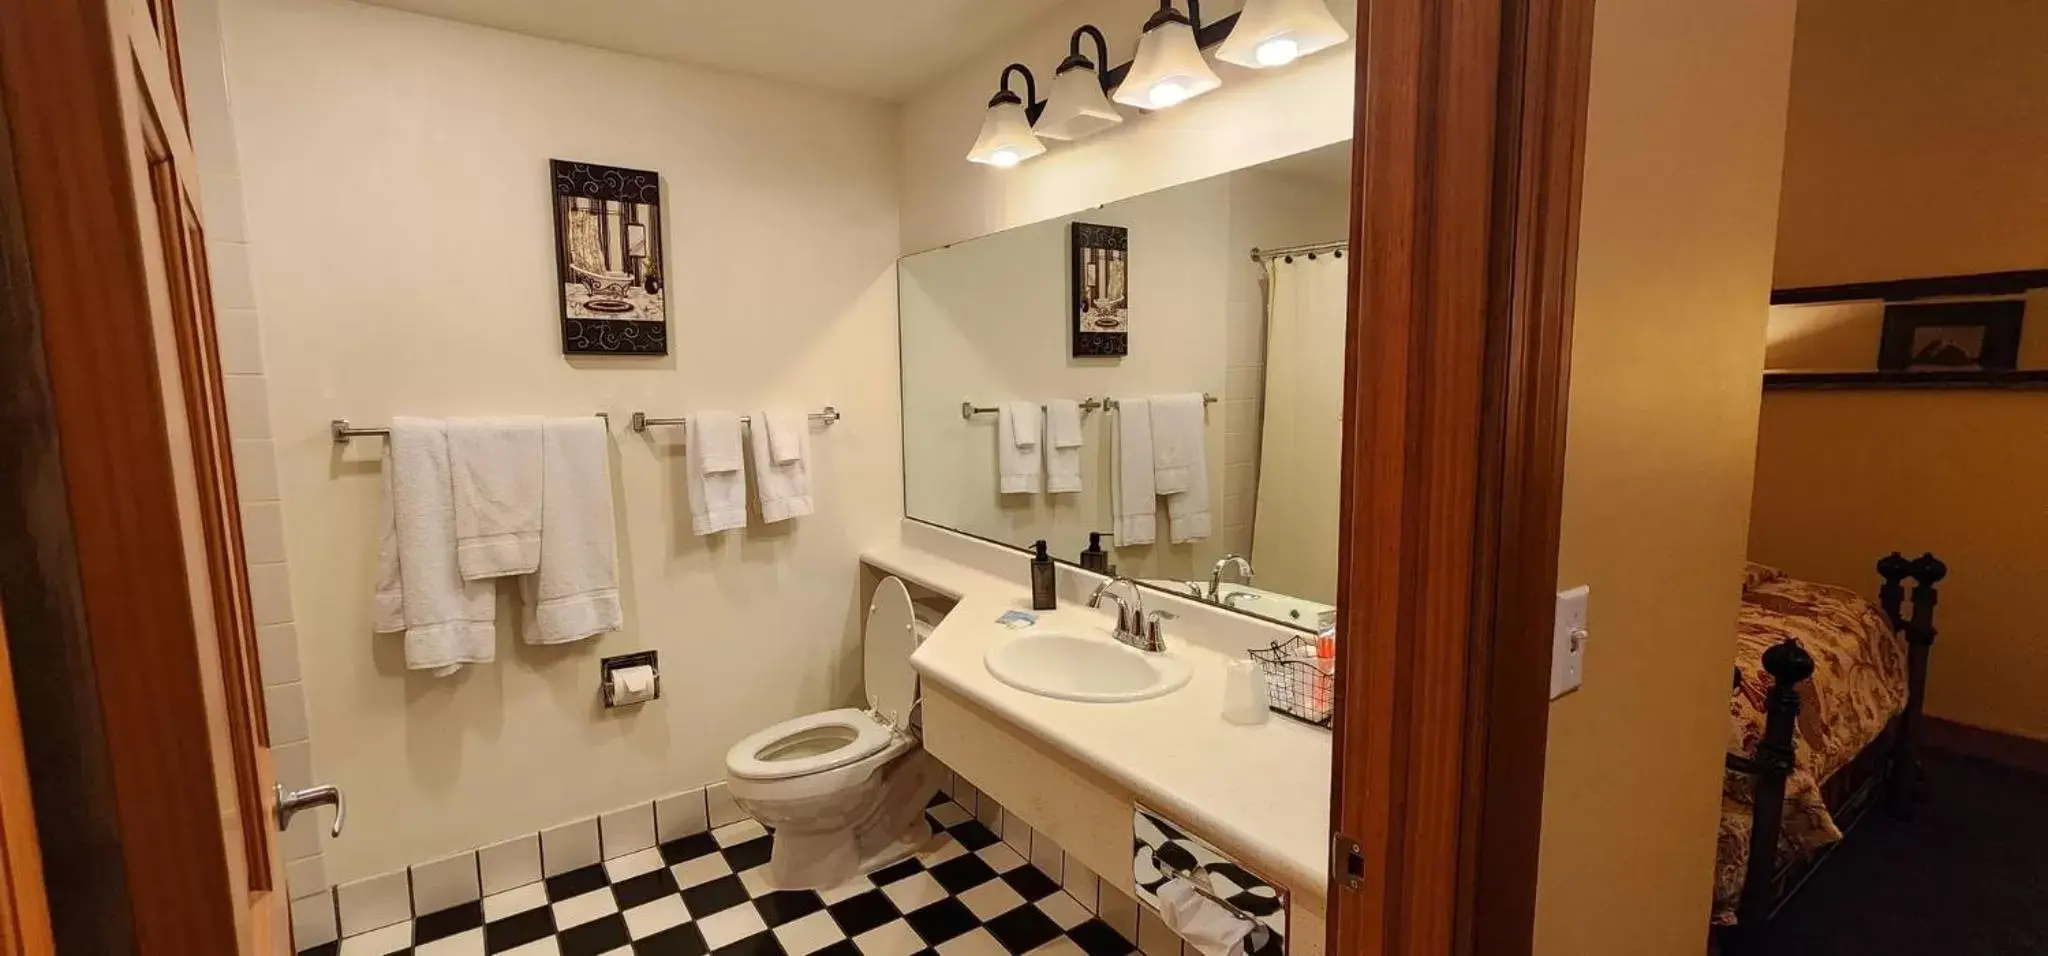 Bathroom in Nuk's Executive Suites